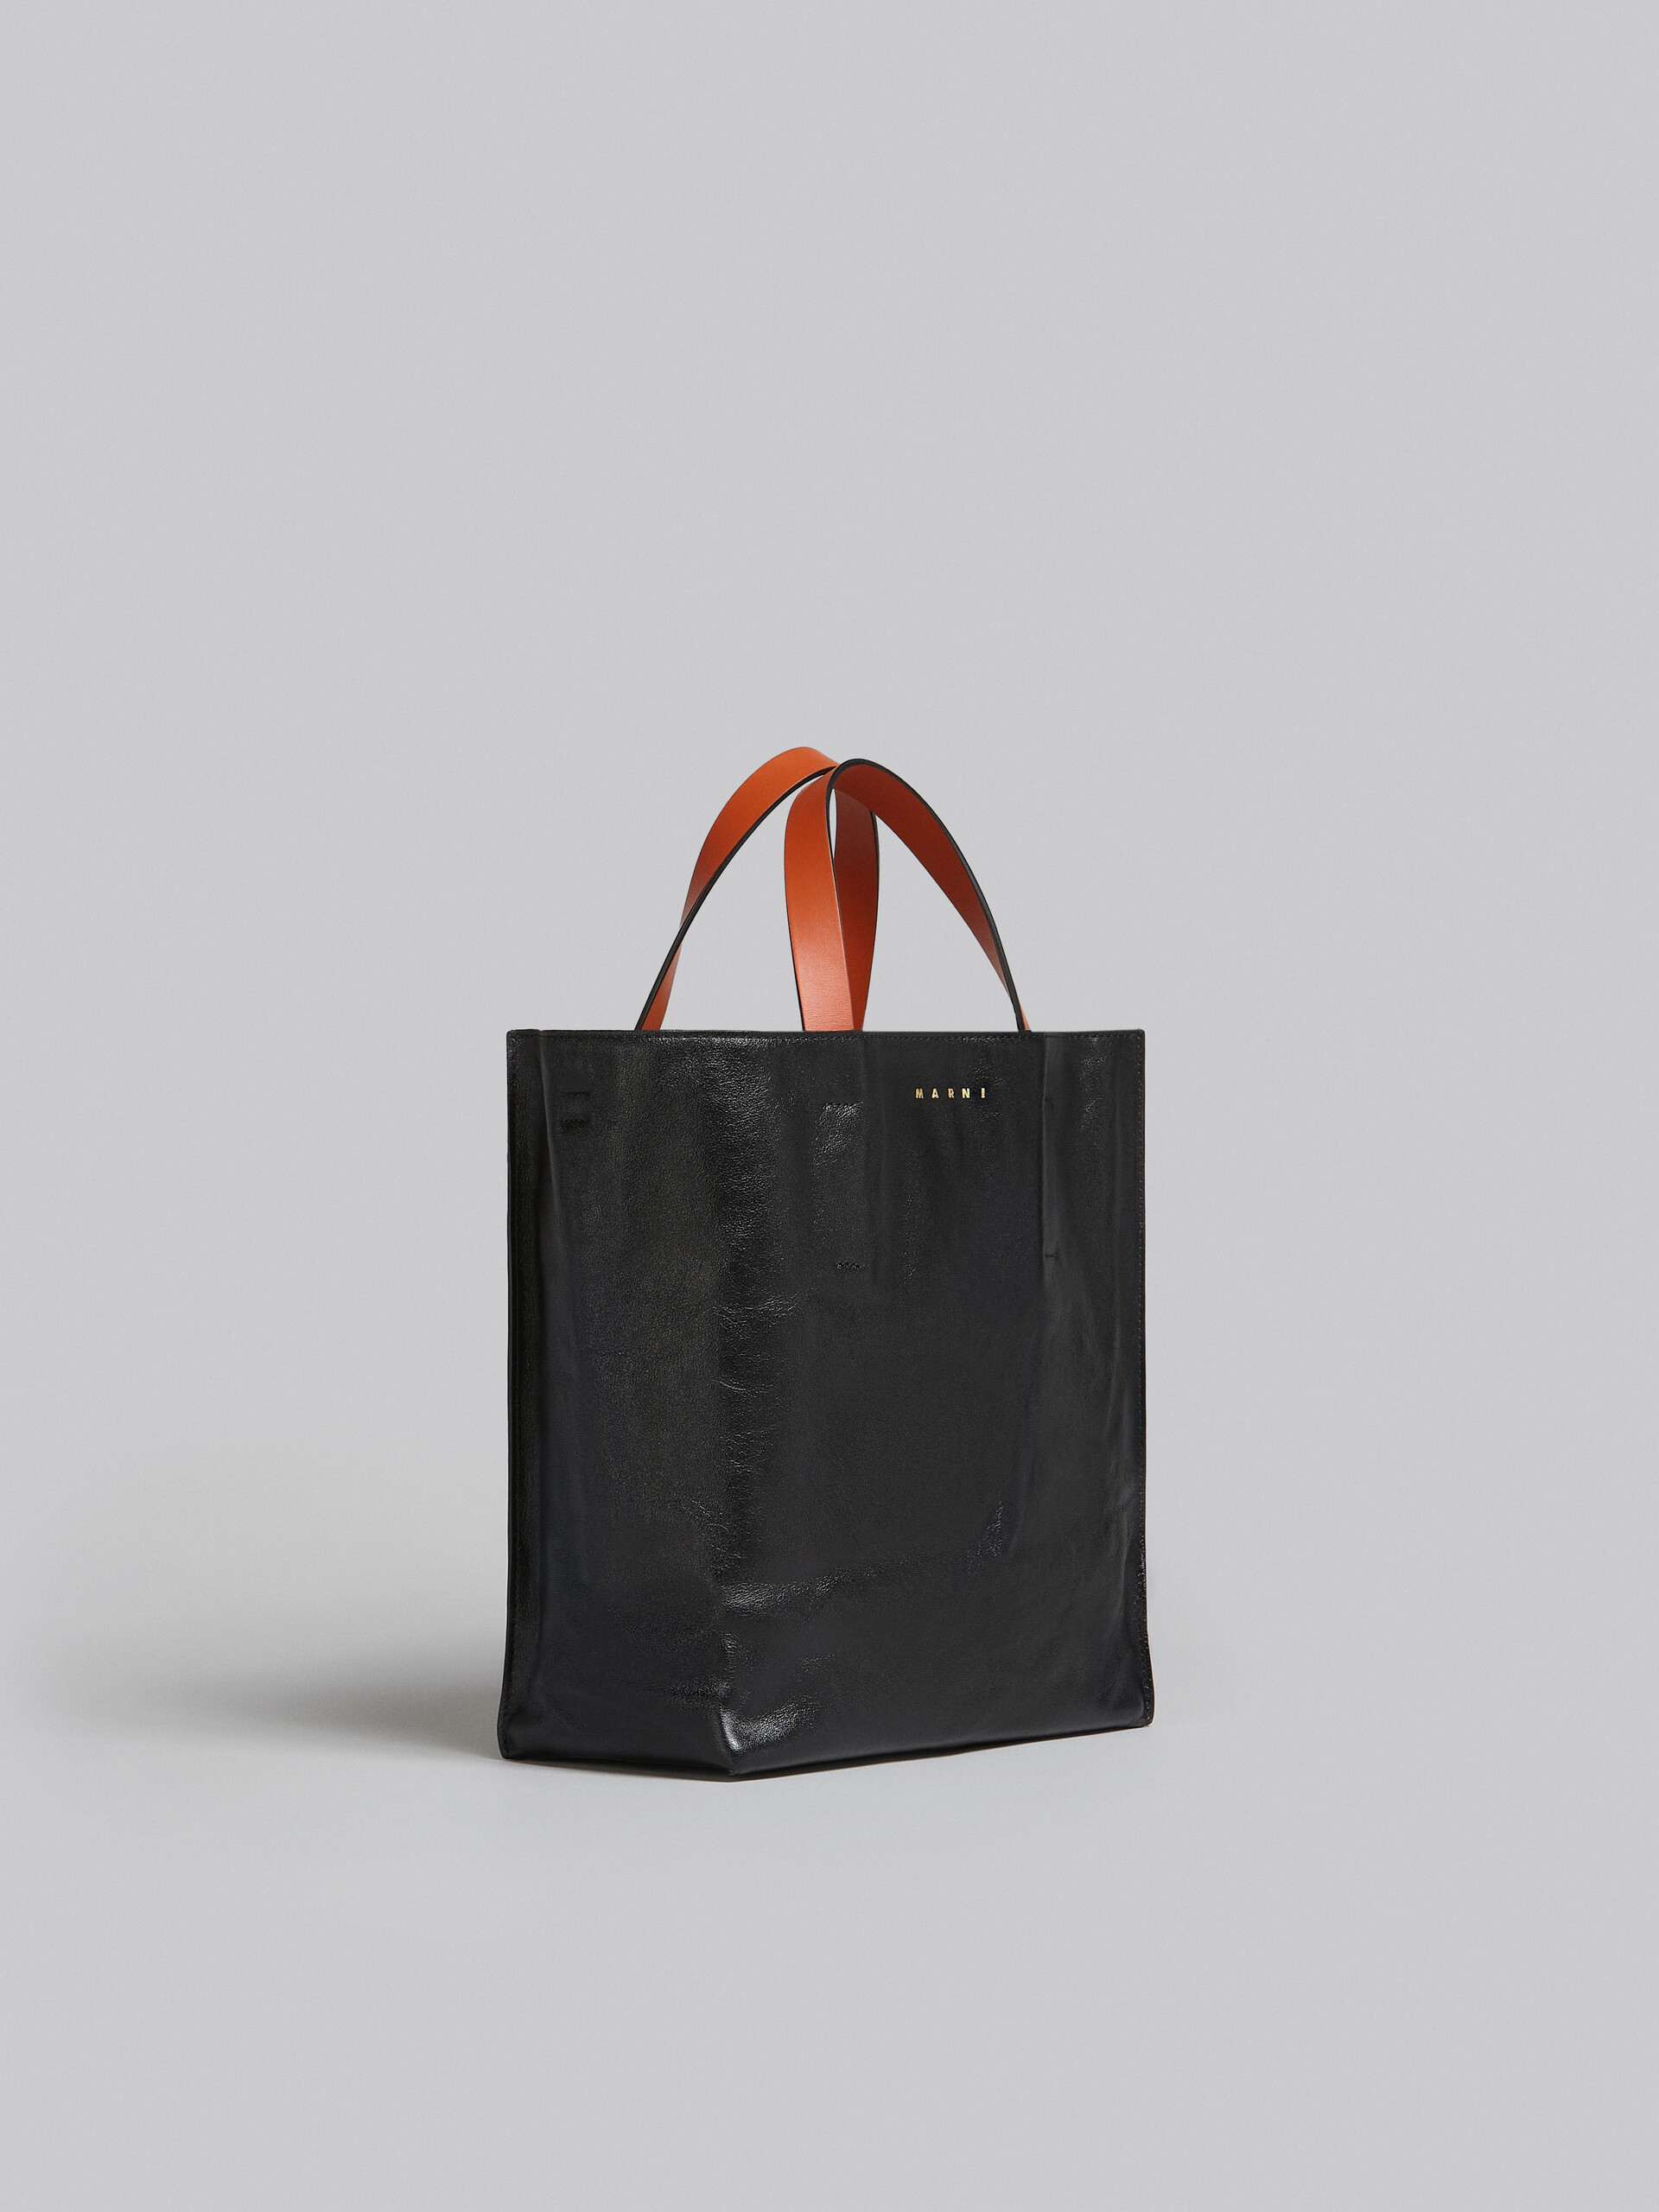 Black green orange tumbled leather MUSEO SOFT bag - Shopping Bags - Image 6